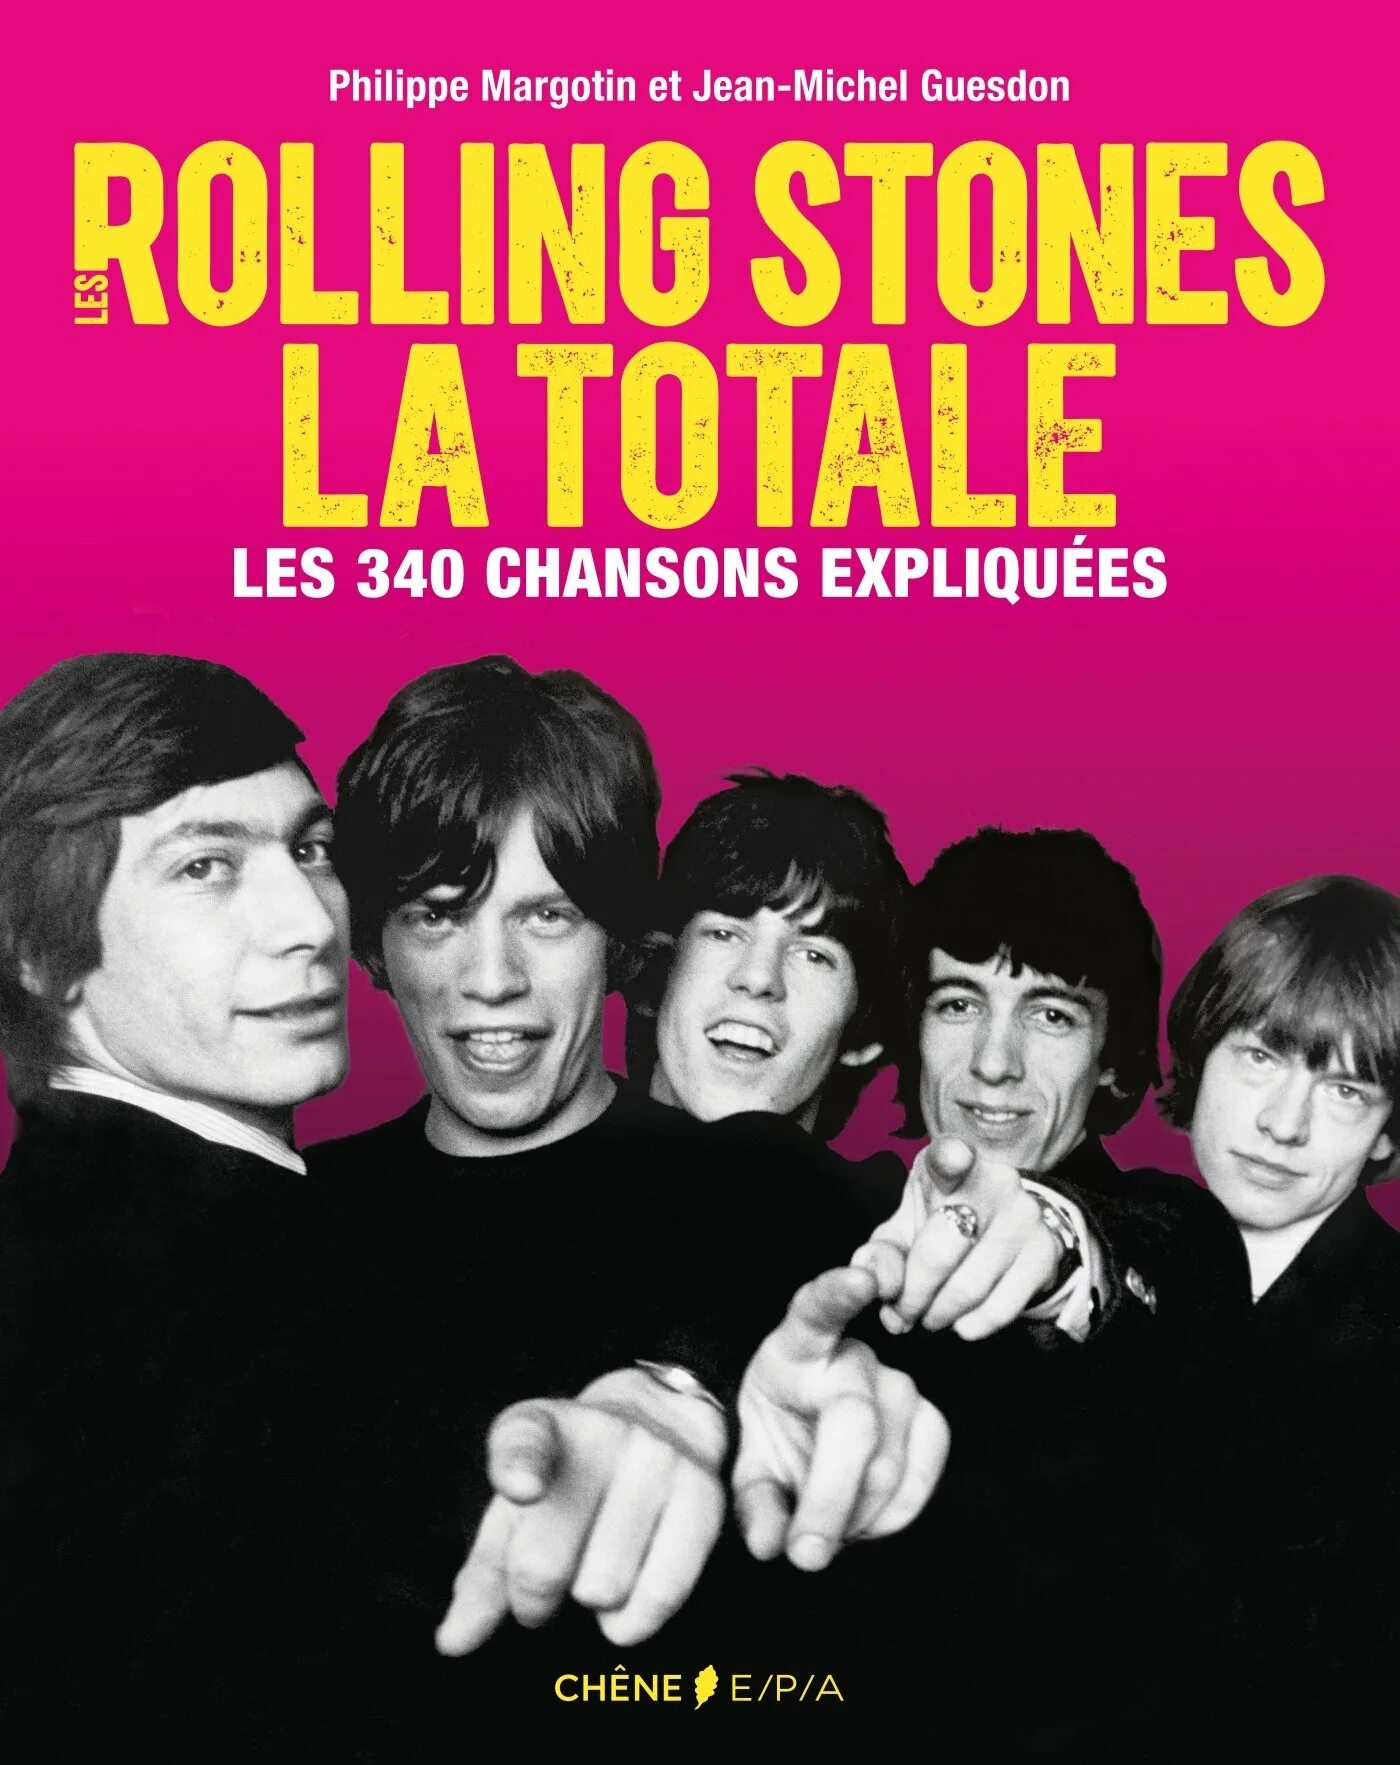 Rolling Stones 1963. Роллинг стоунз 60-е. Rolling Stones 1963 фото. Книга Роллинг стоунз. Rolling stones song stoned